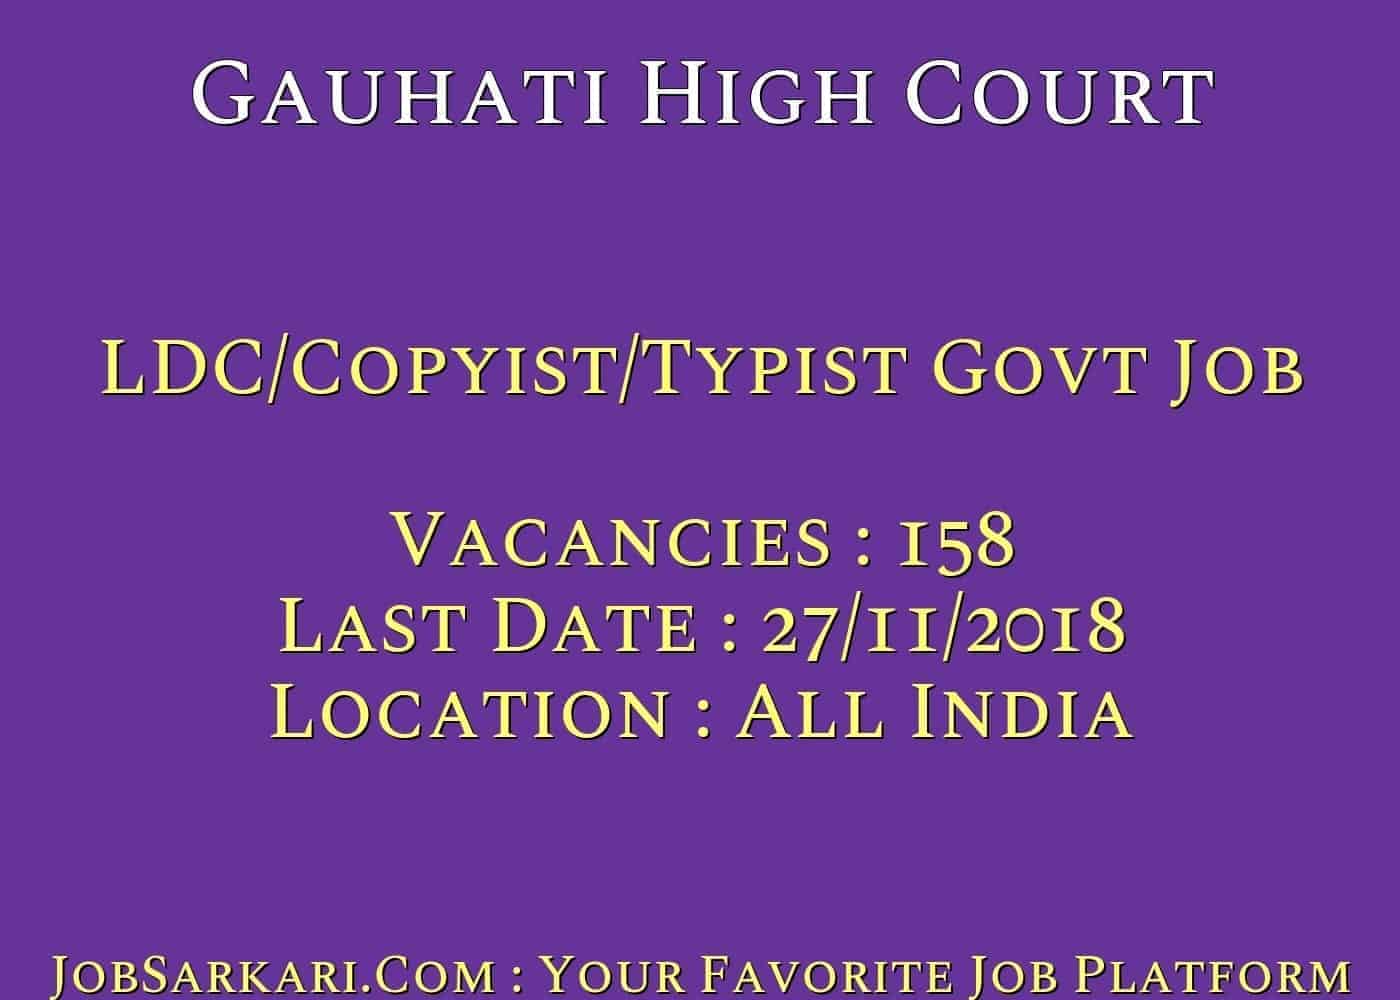 Gauhati High Court Recruitment 2018 for LDC/Copyist/Typist Govt Job